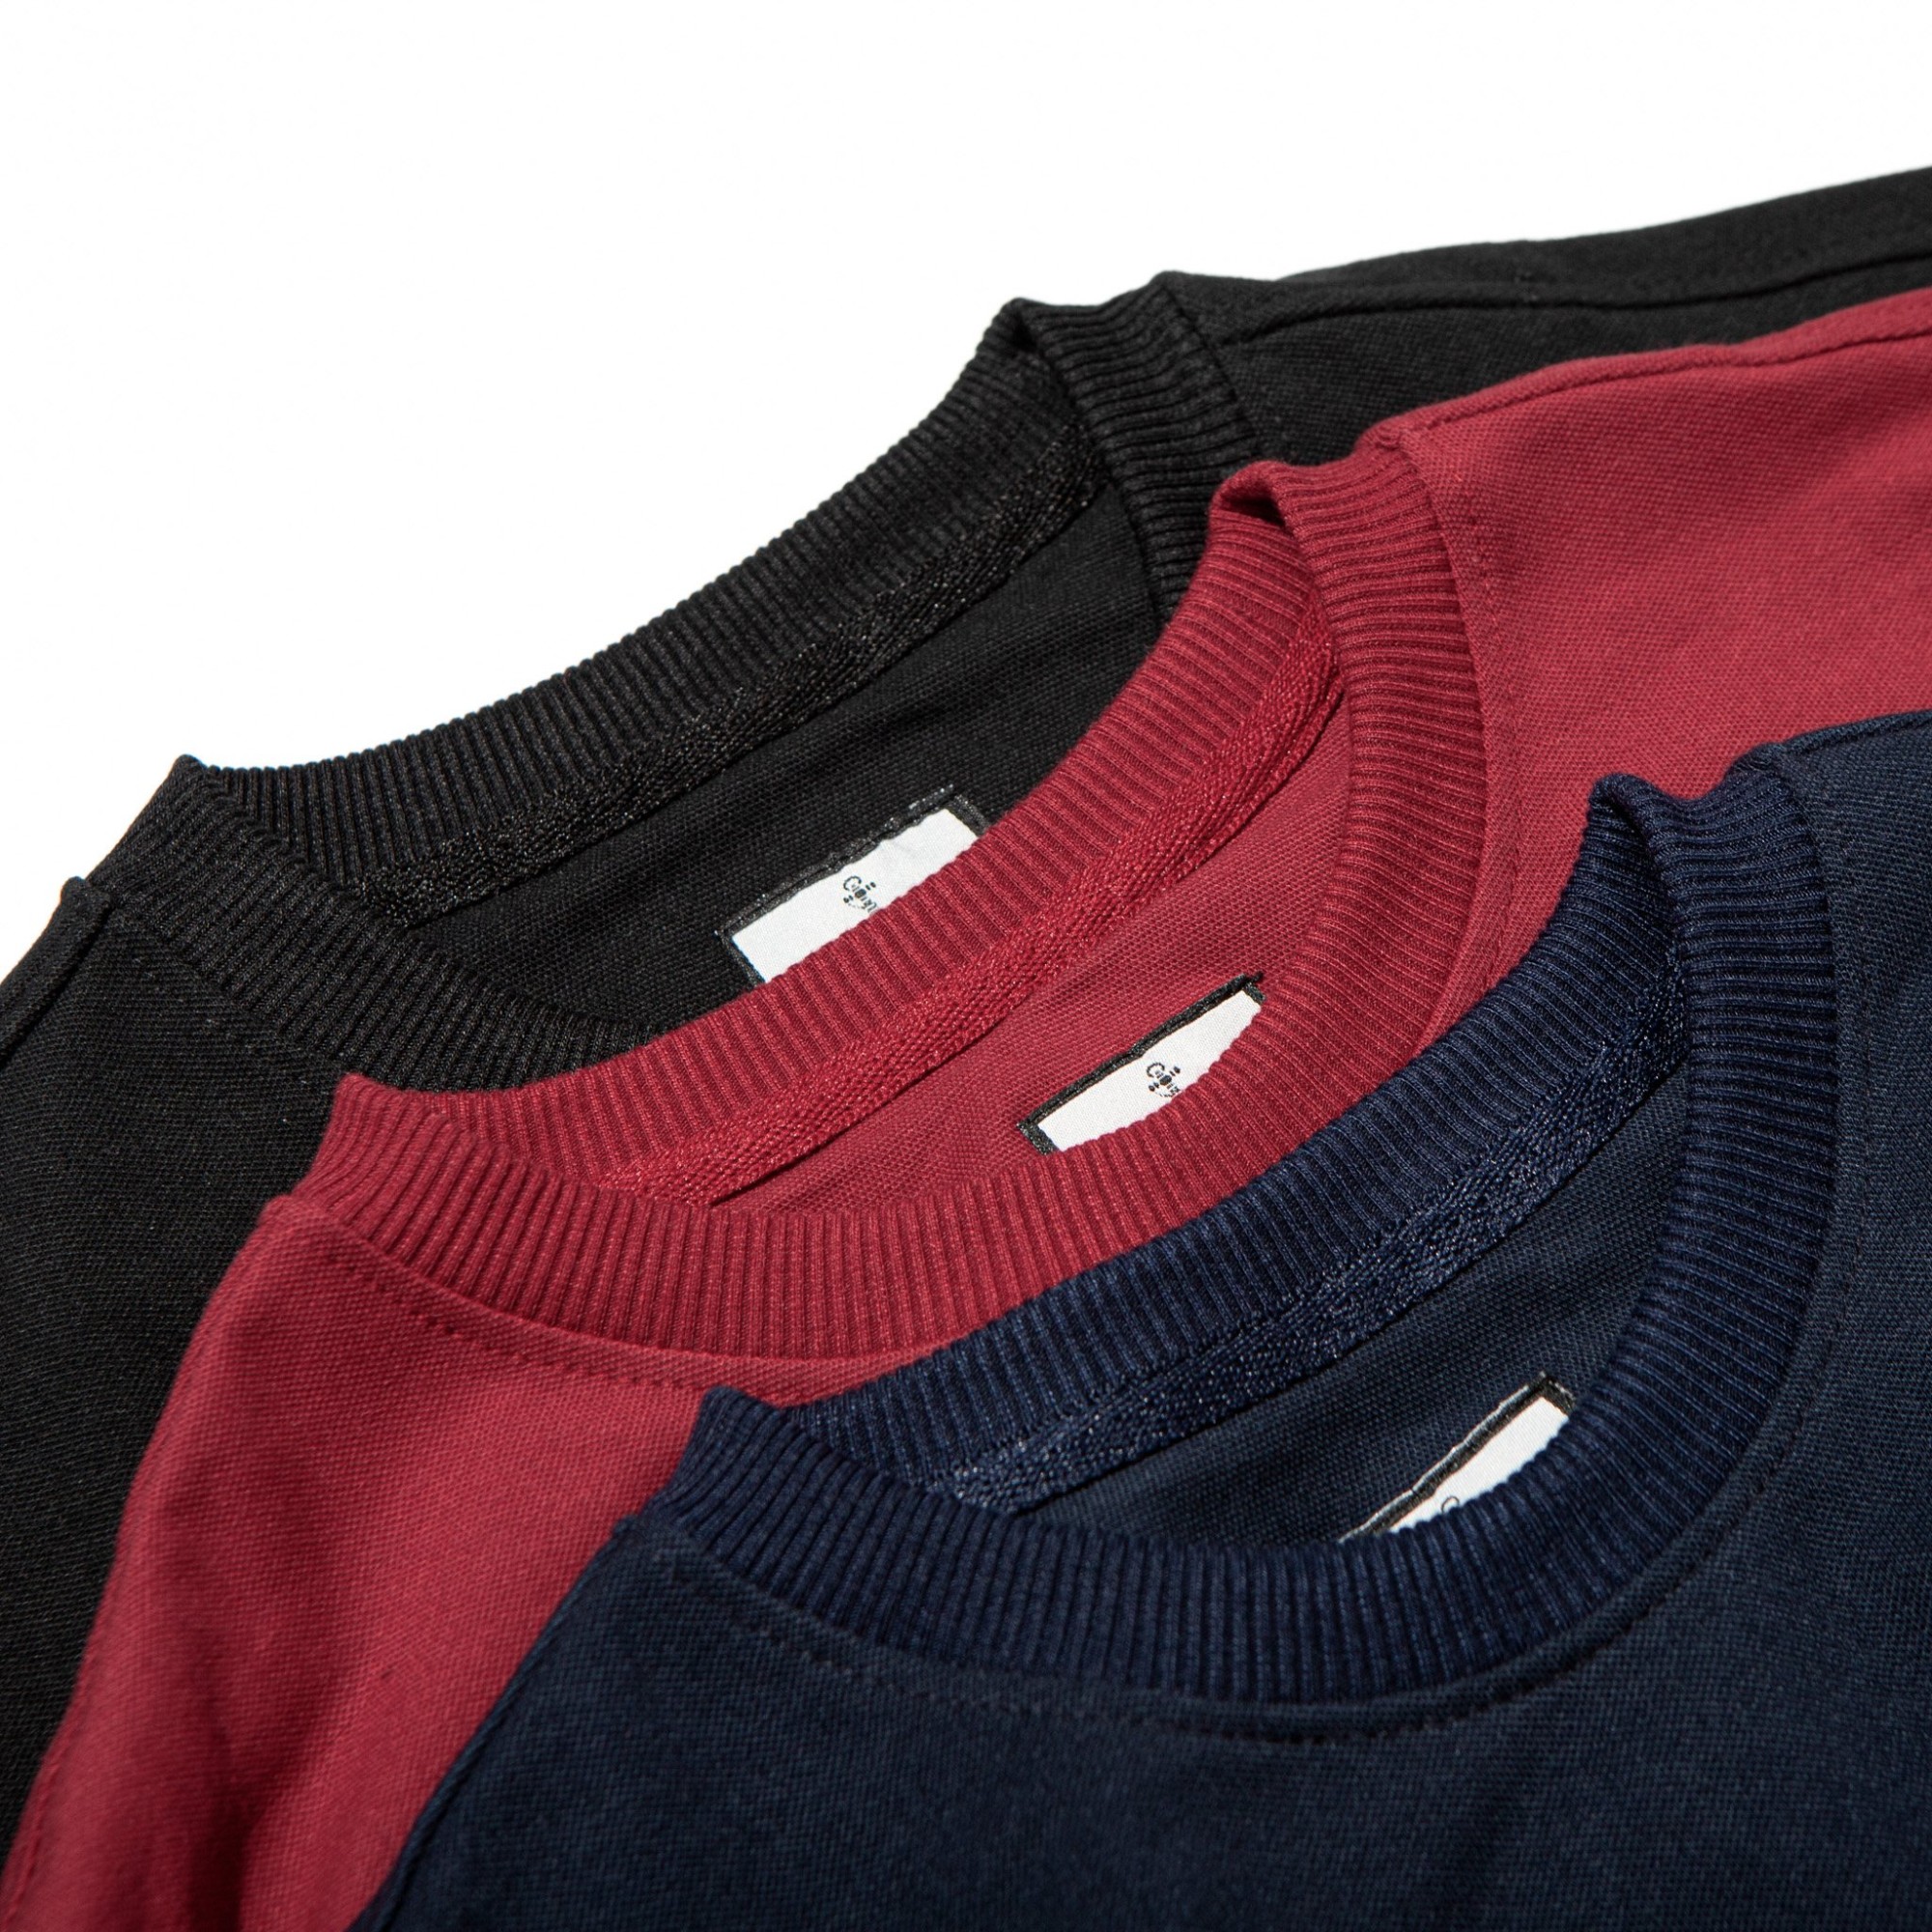 Áo sweater không túi Old Sailor - O.S.L SWEATERS - NAVY - SWXD884391-  xanh đen - big size upto 5XL